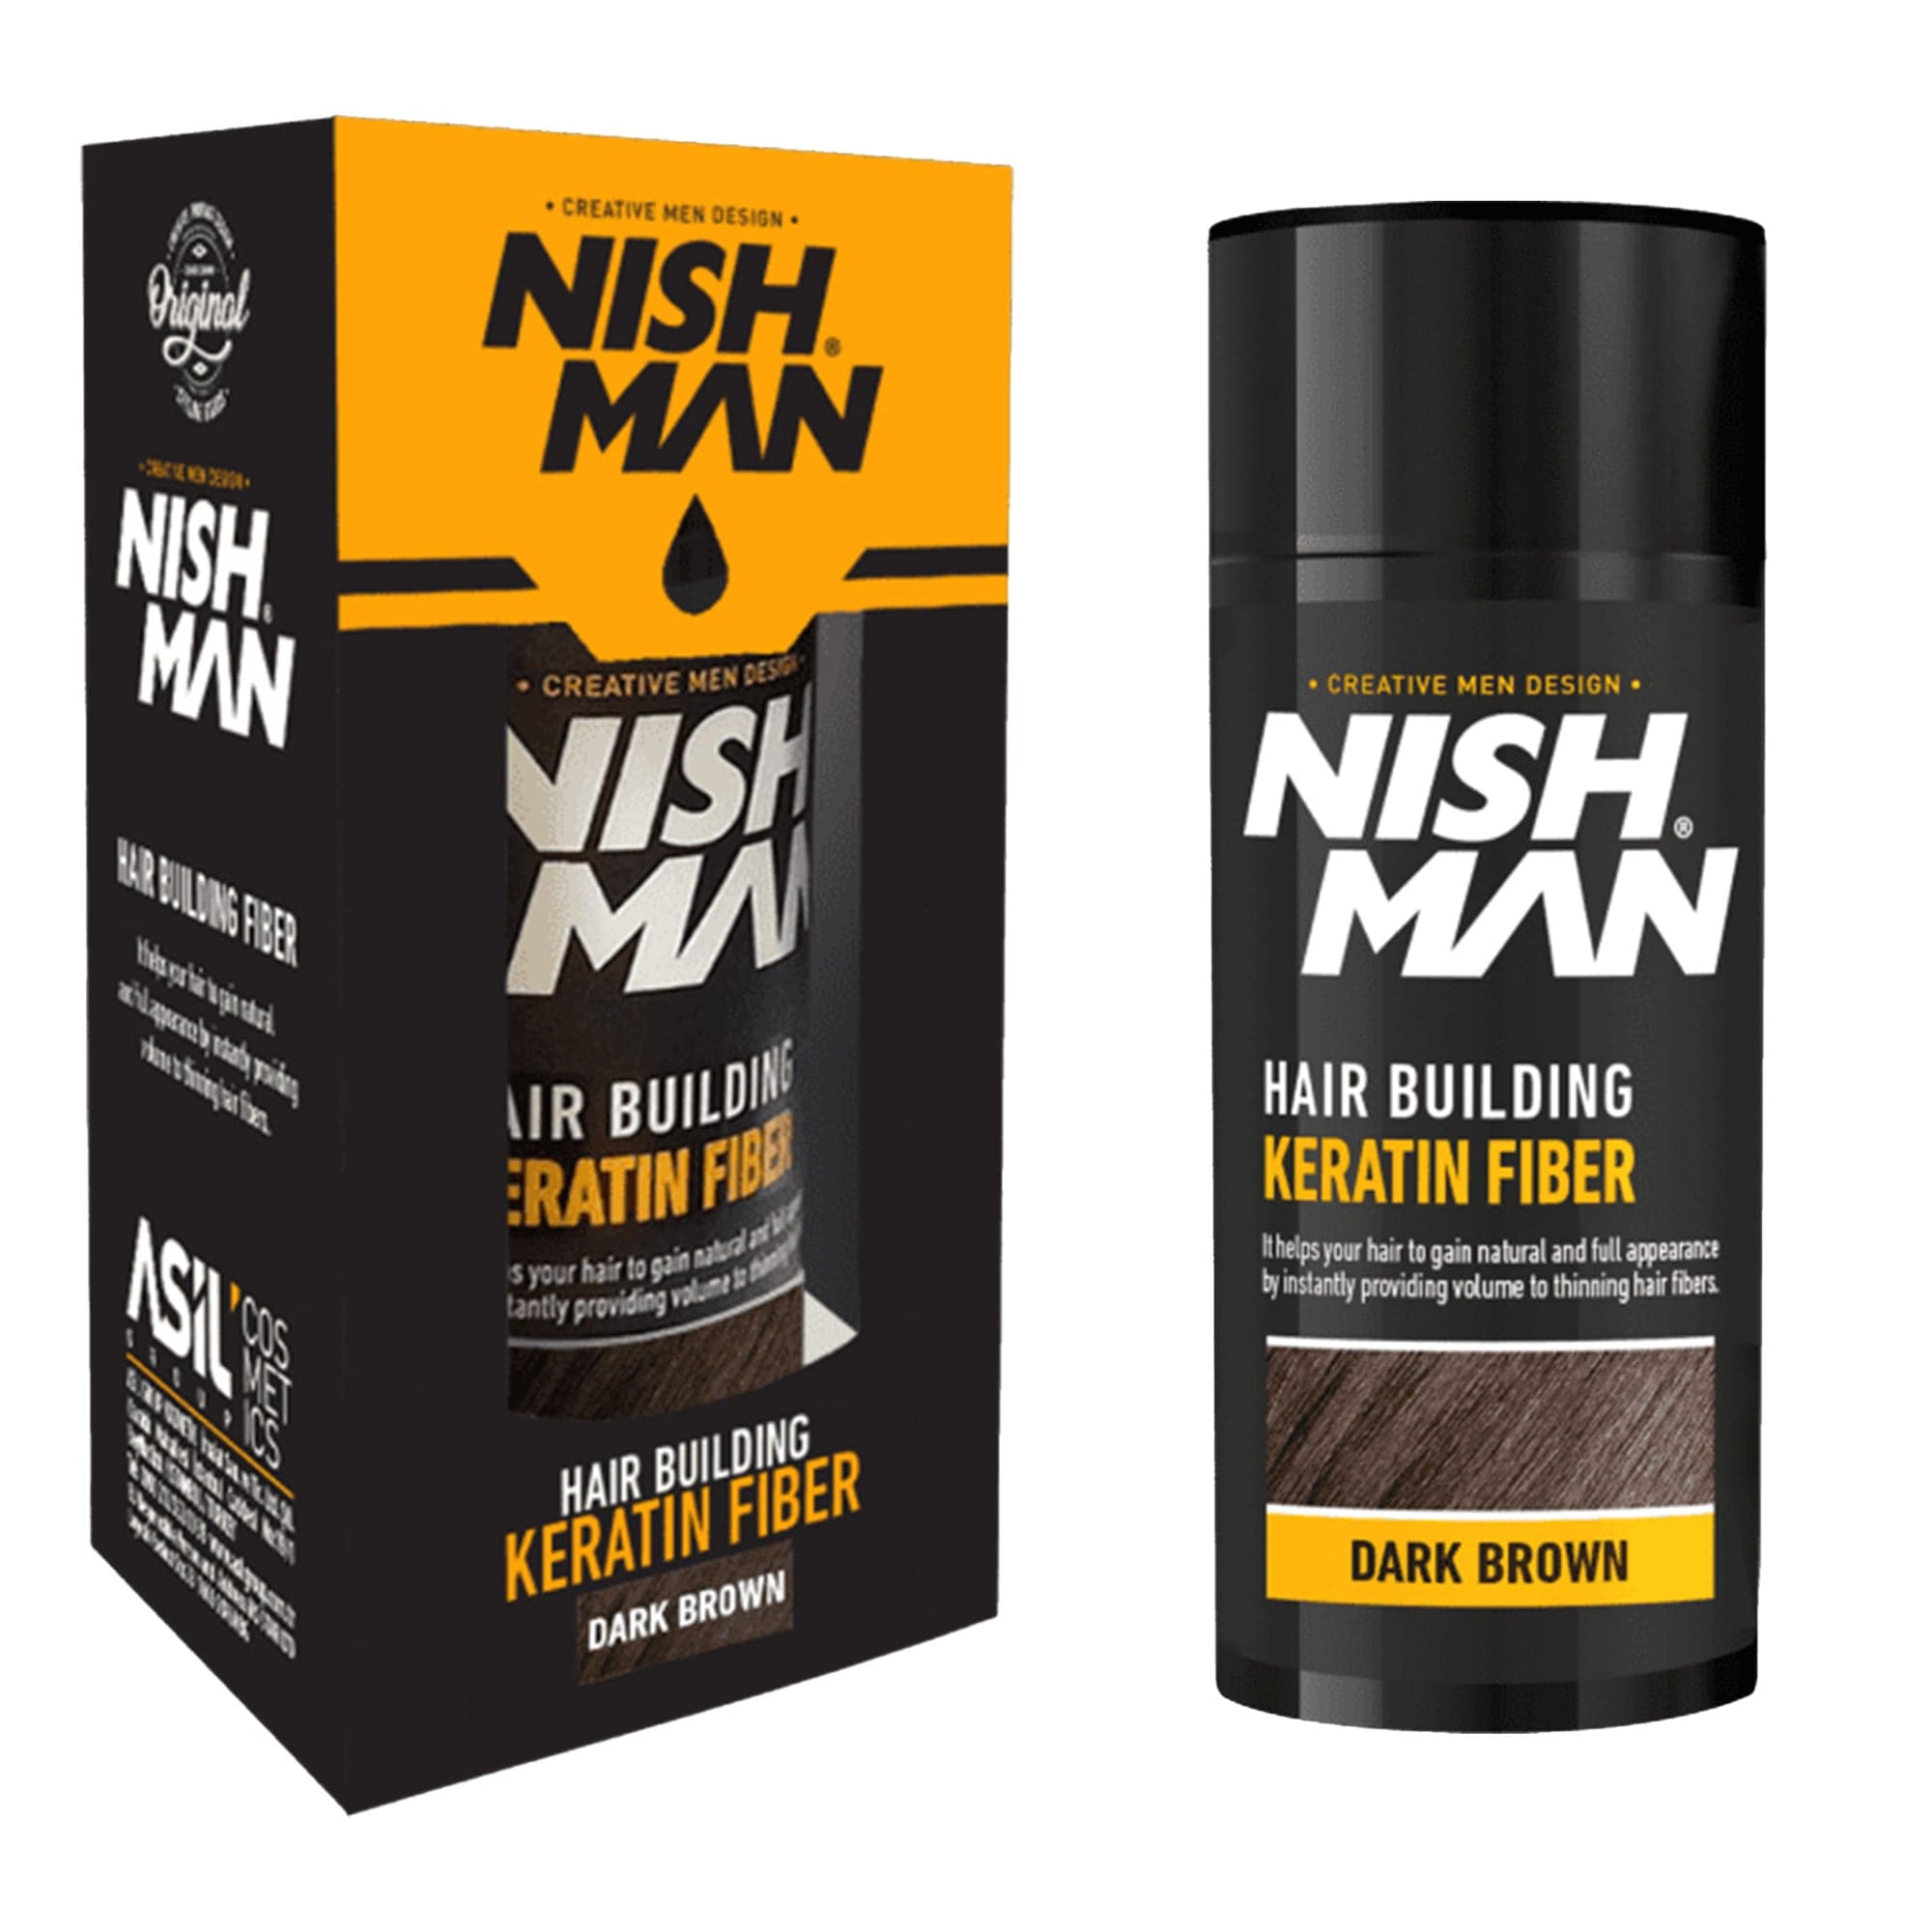 Nishman - Hair Building Keratin Fiber Dark Brown 21g